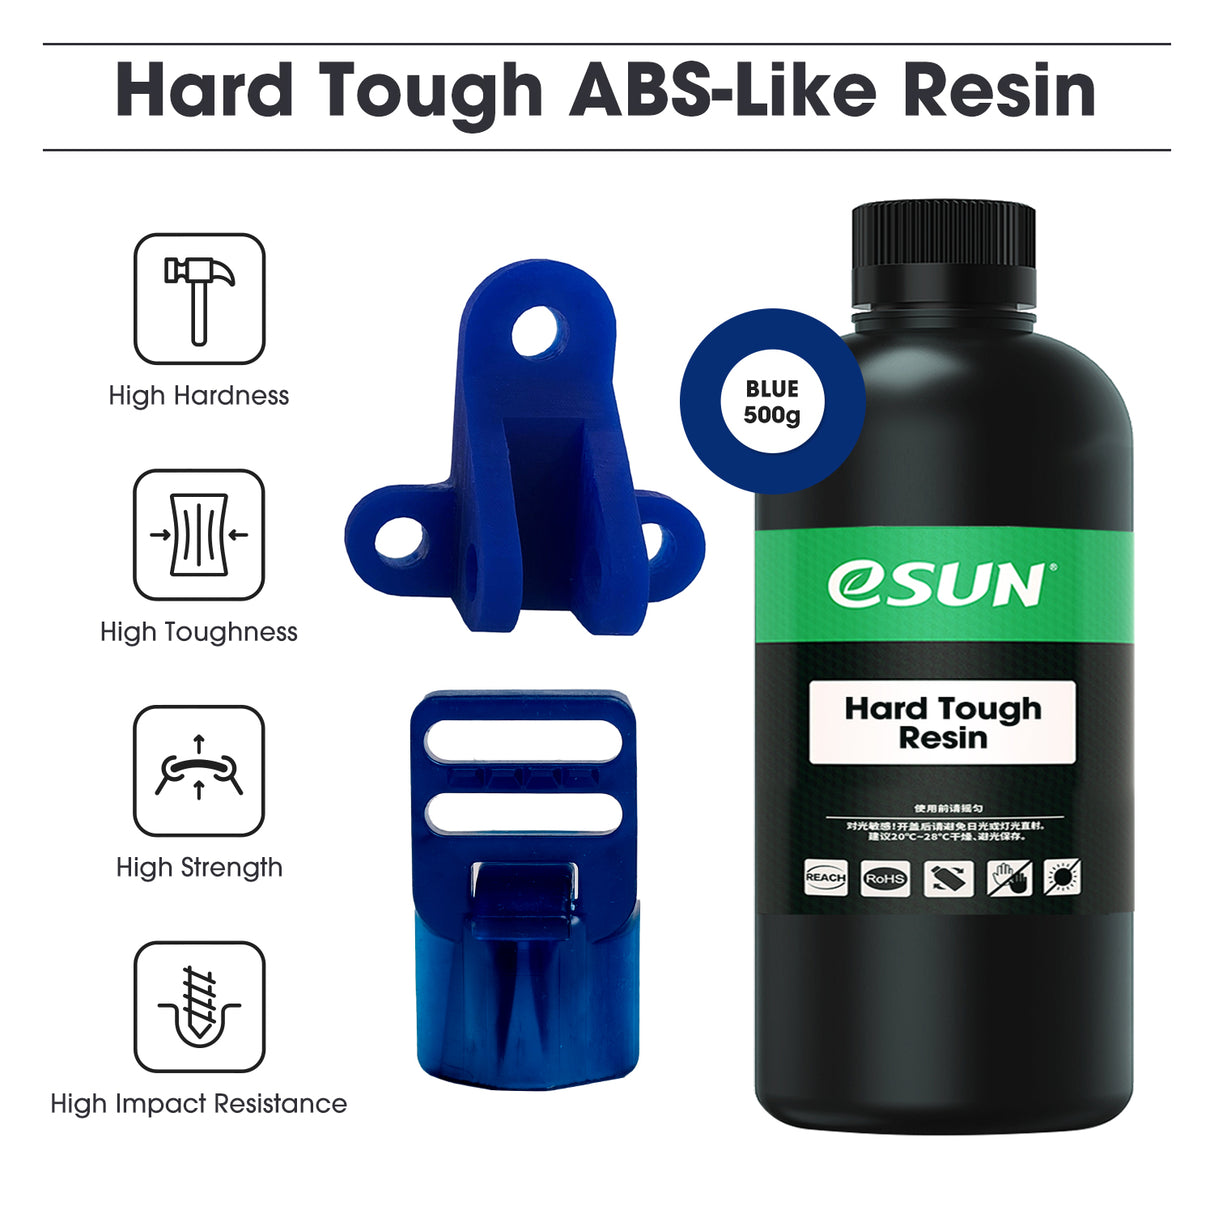 eSUN LCD Hard Tough ABS-Like Resin 0.5KG